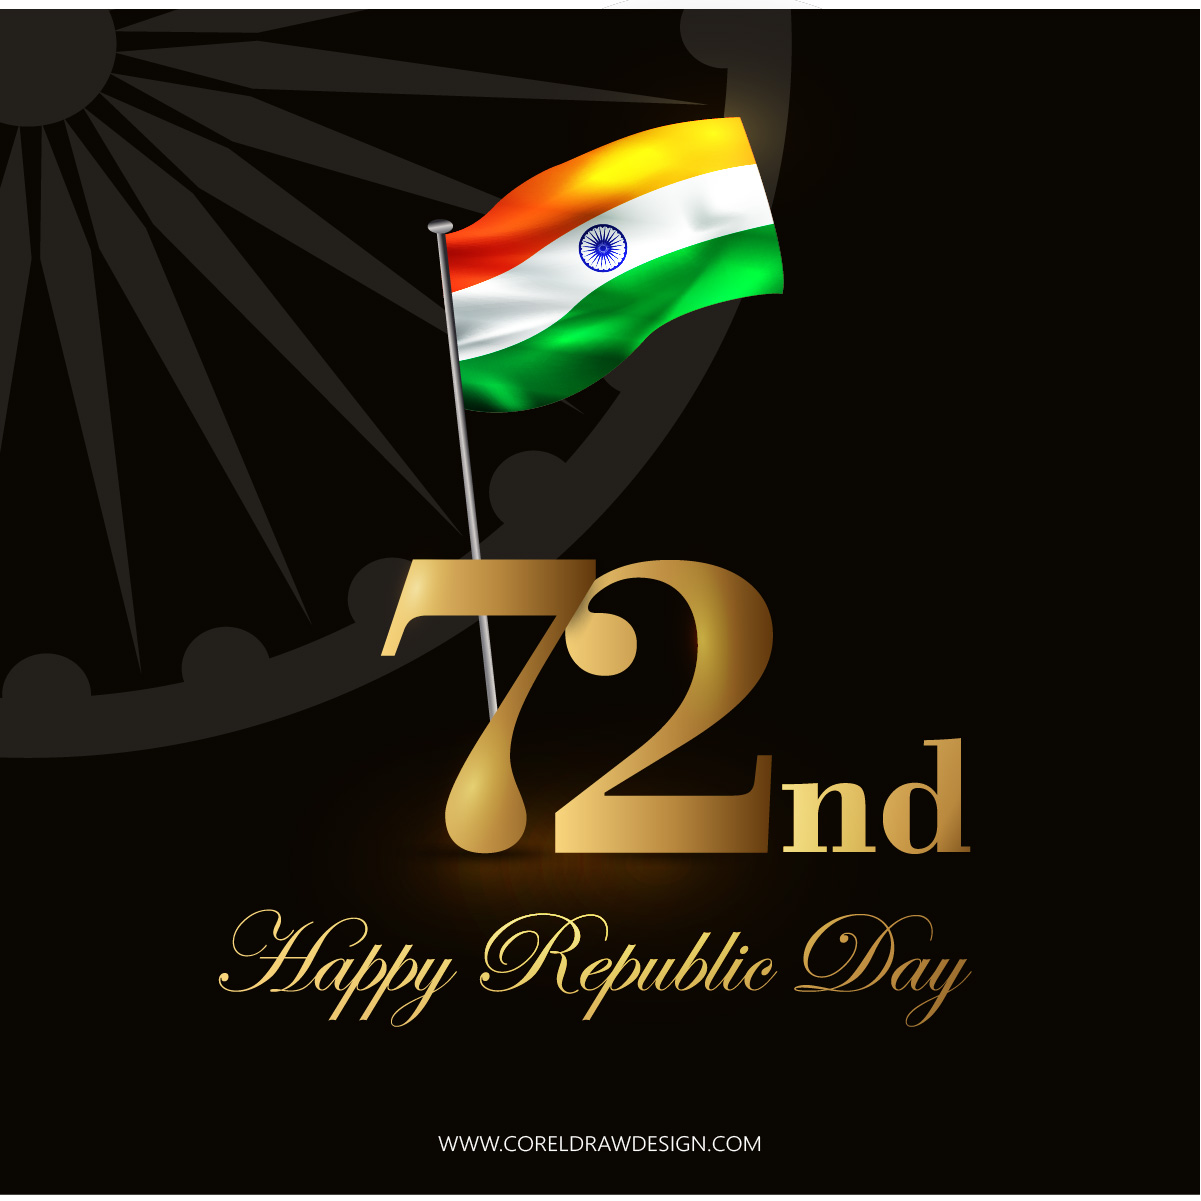 Download Happy 72nd Republic Day | CorelDraw Design (Download Free ...